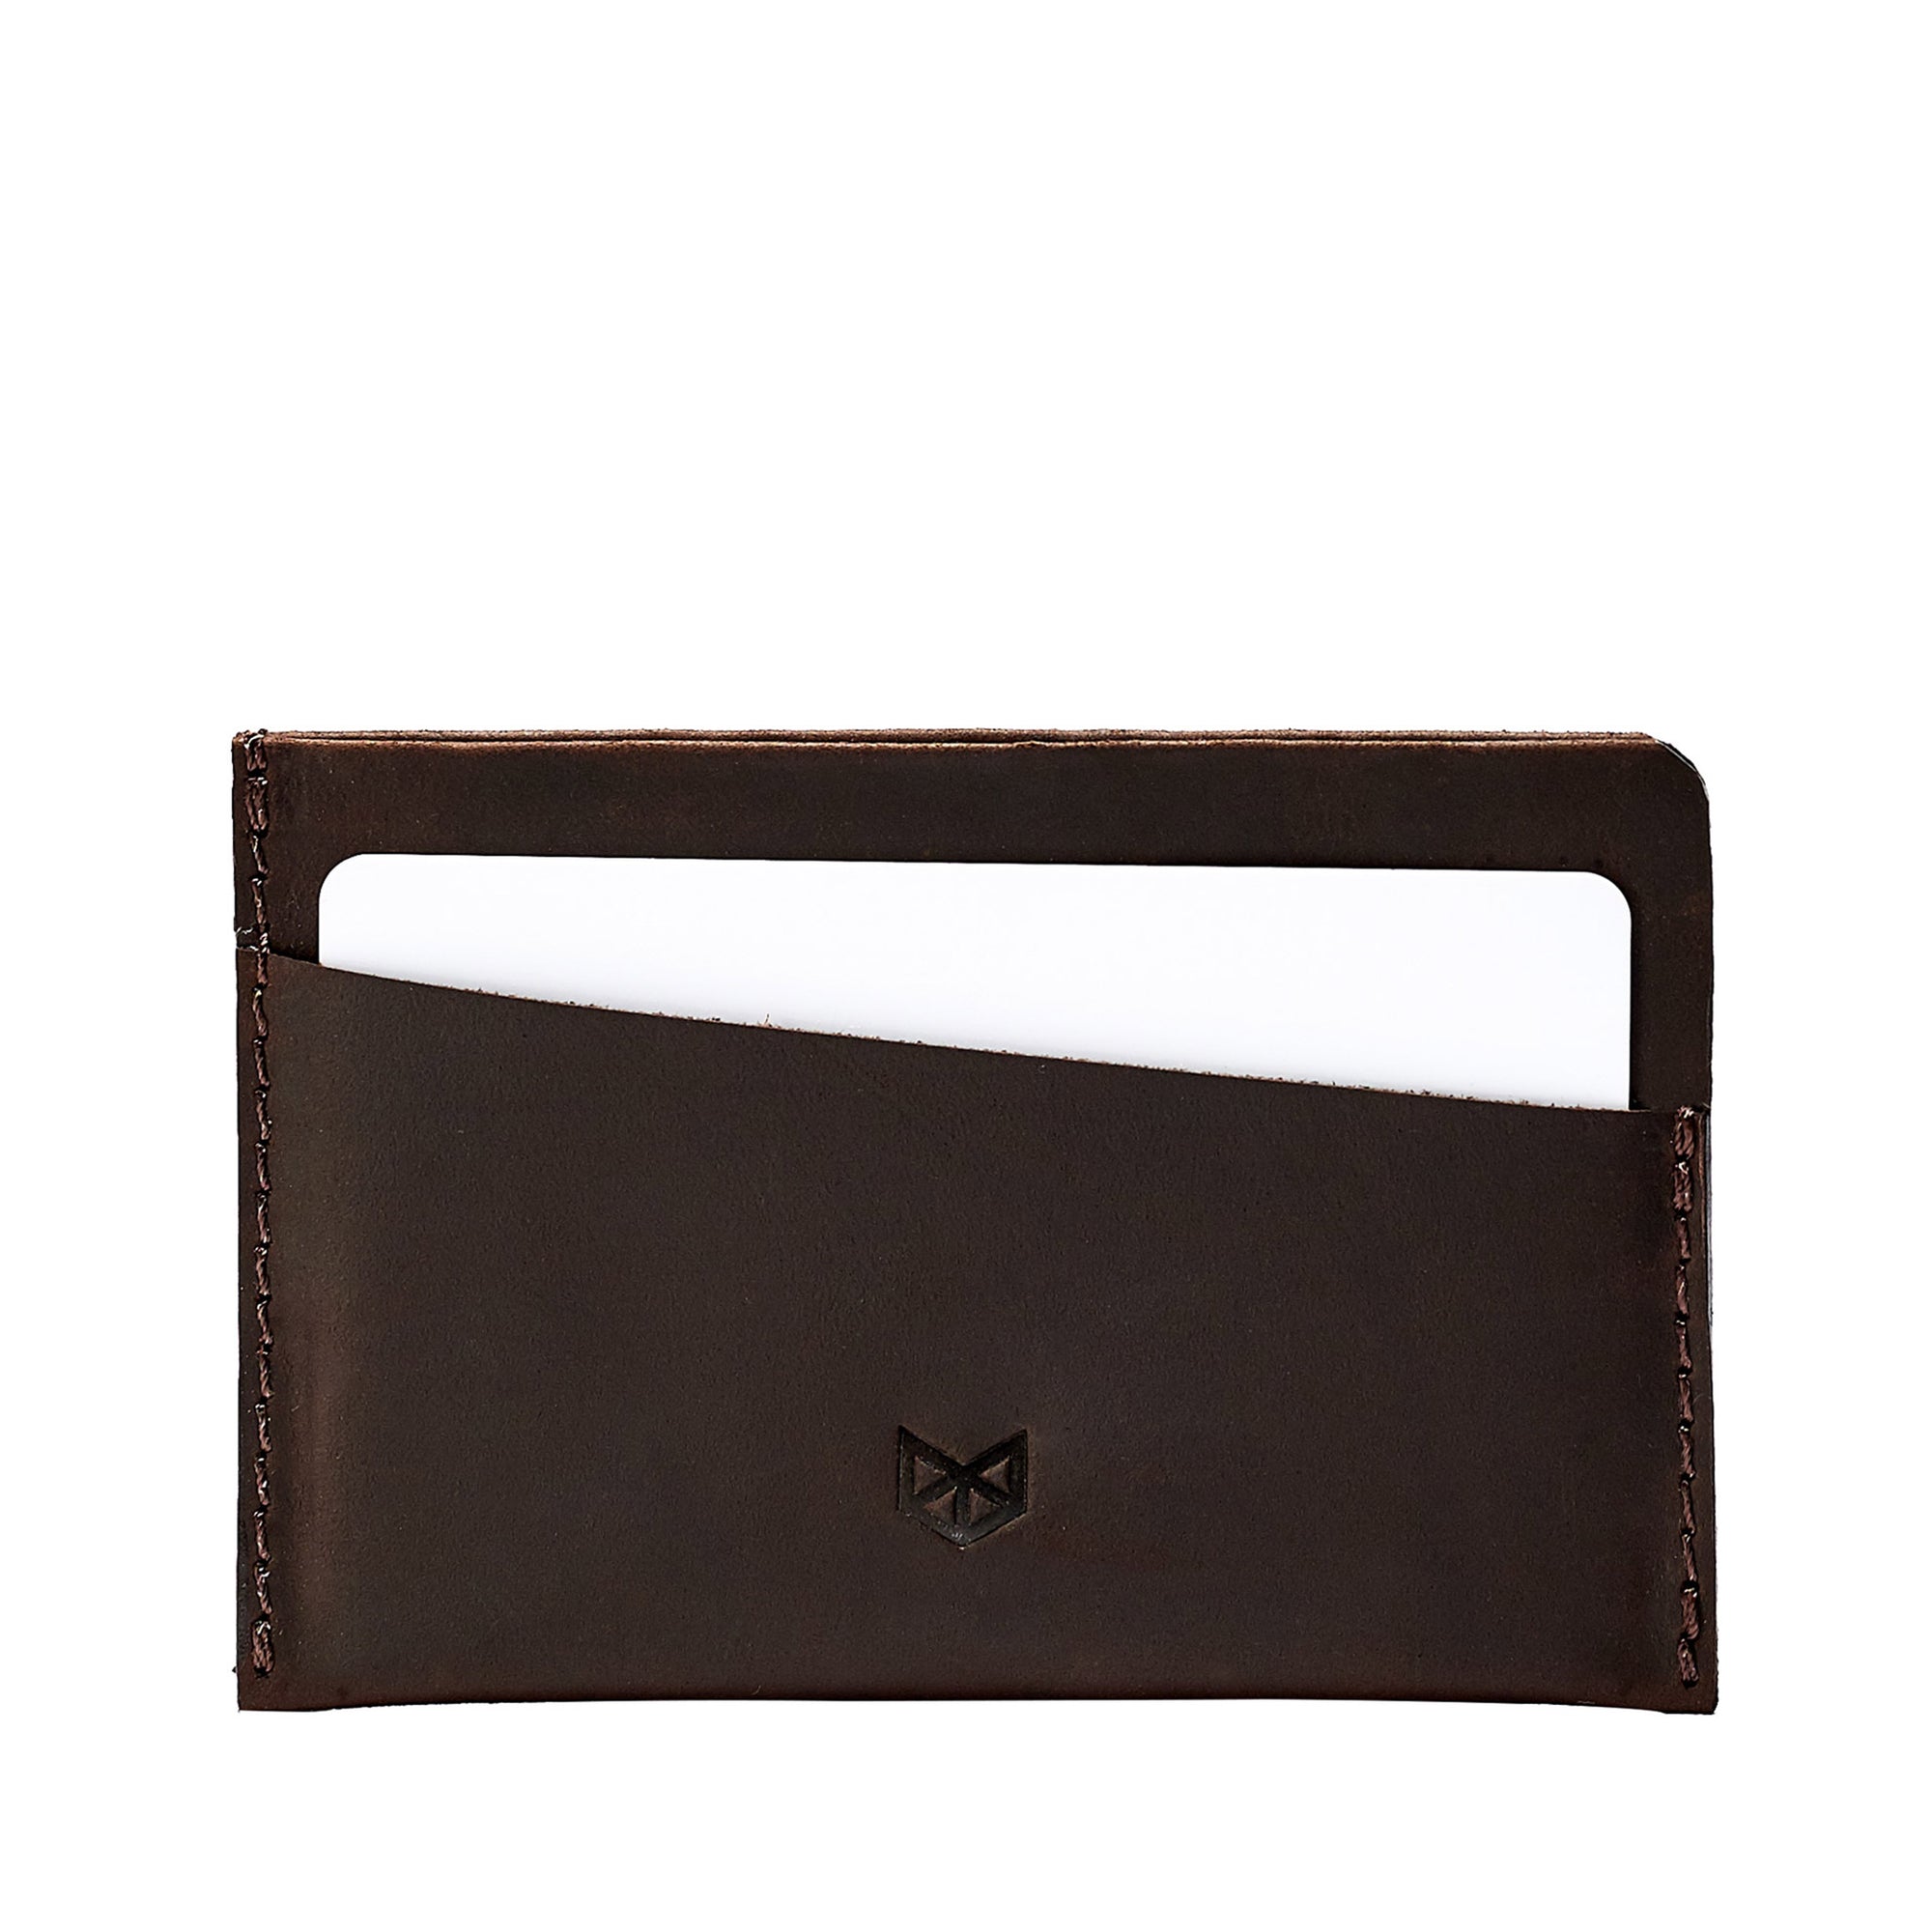 Slim dark brown leather card holder. Gifts for men, leather tan card holder, handmade accessories, minimalist designer cards wallet